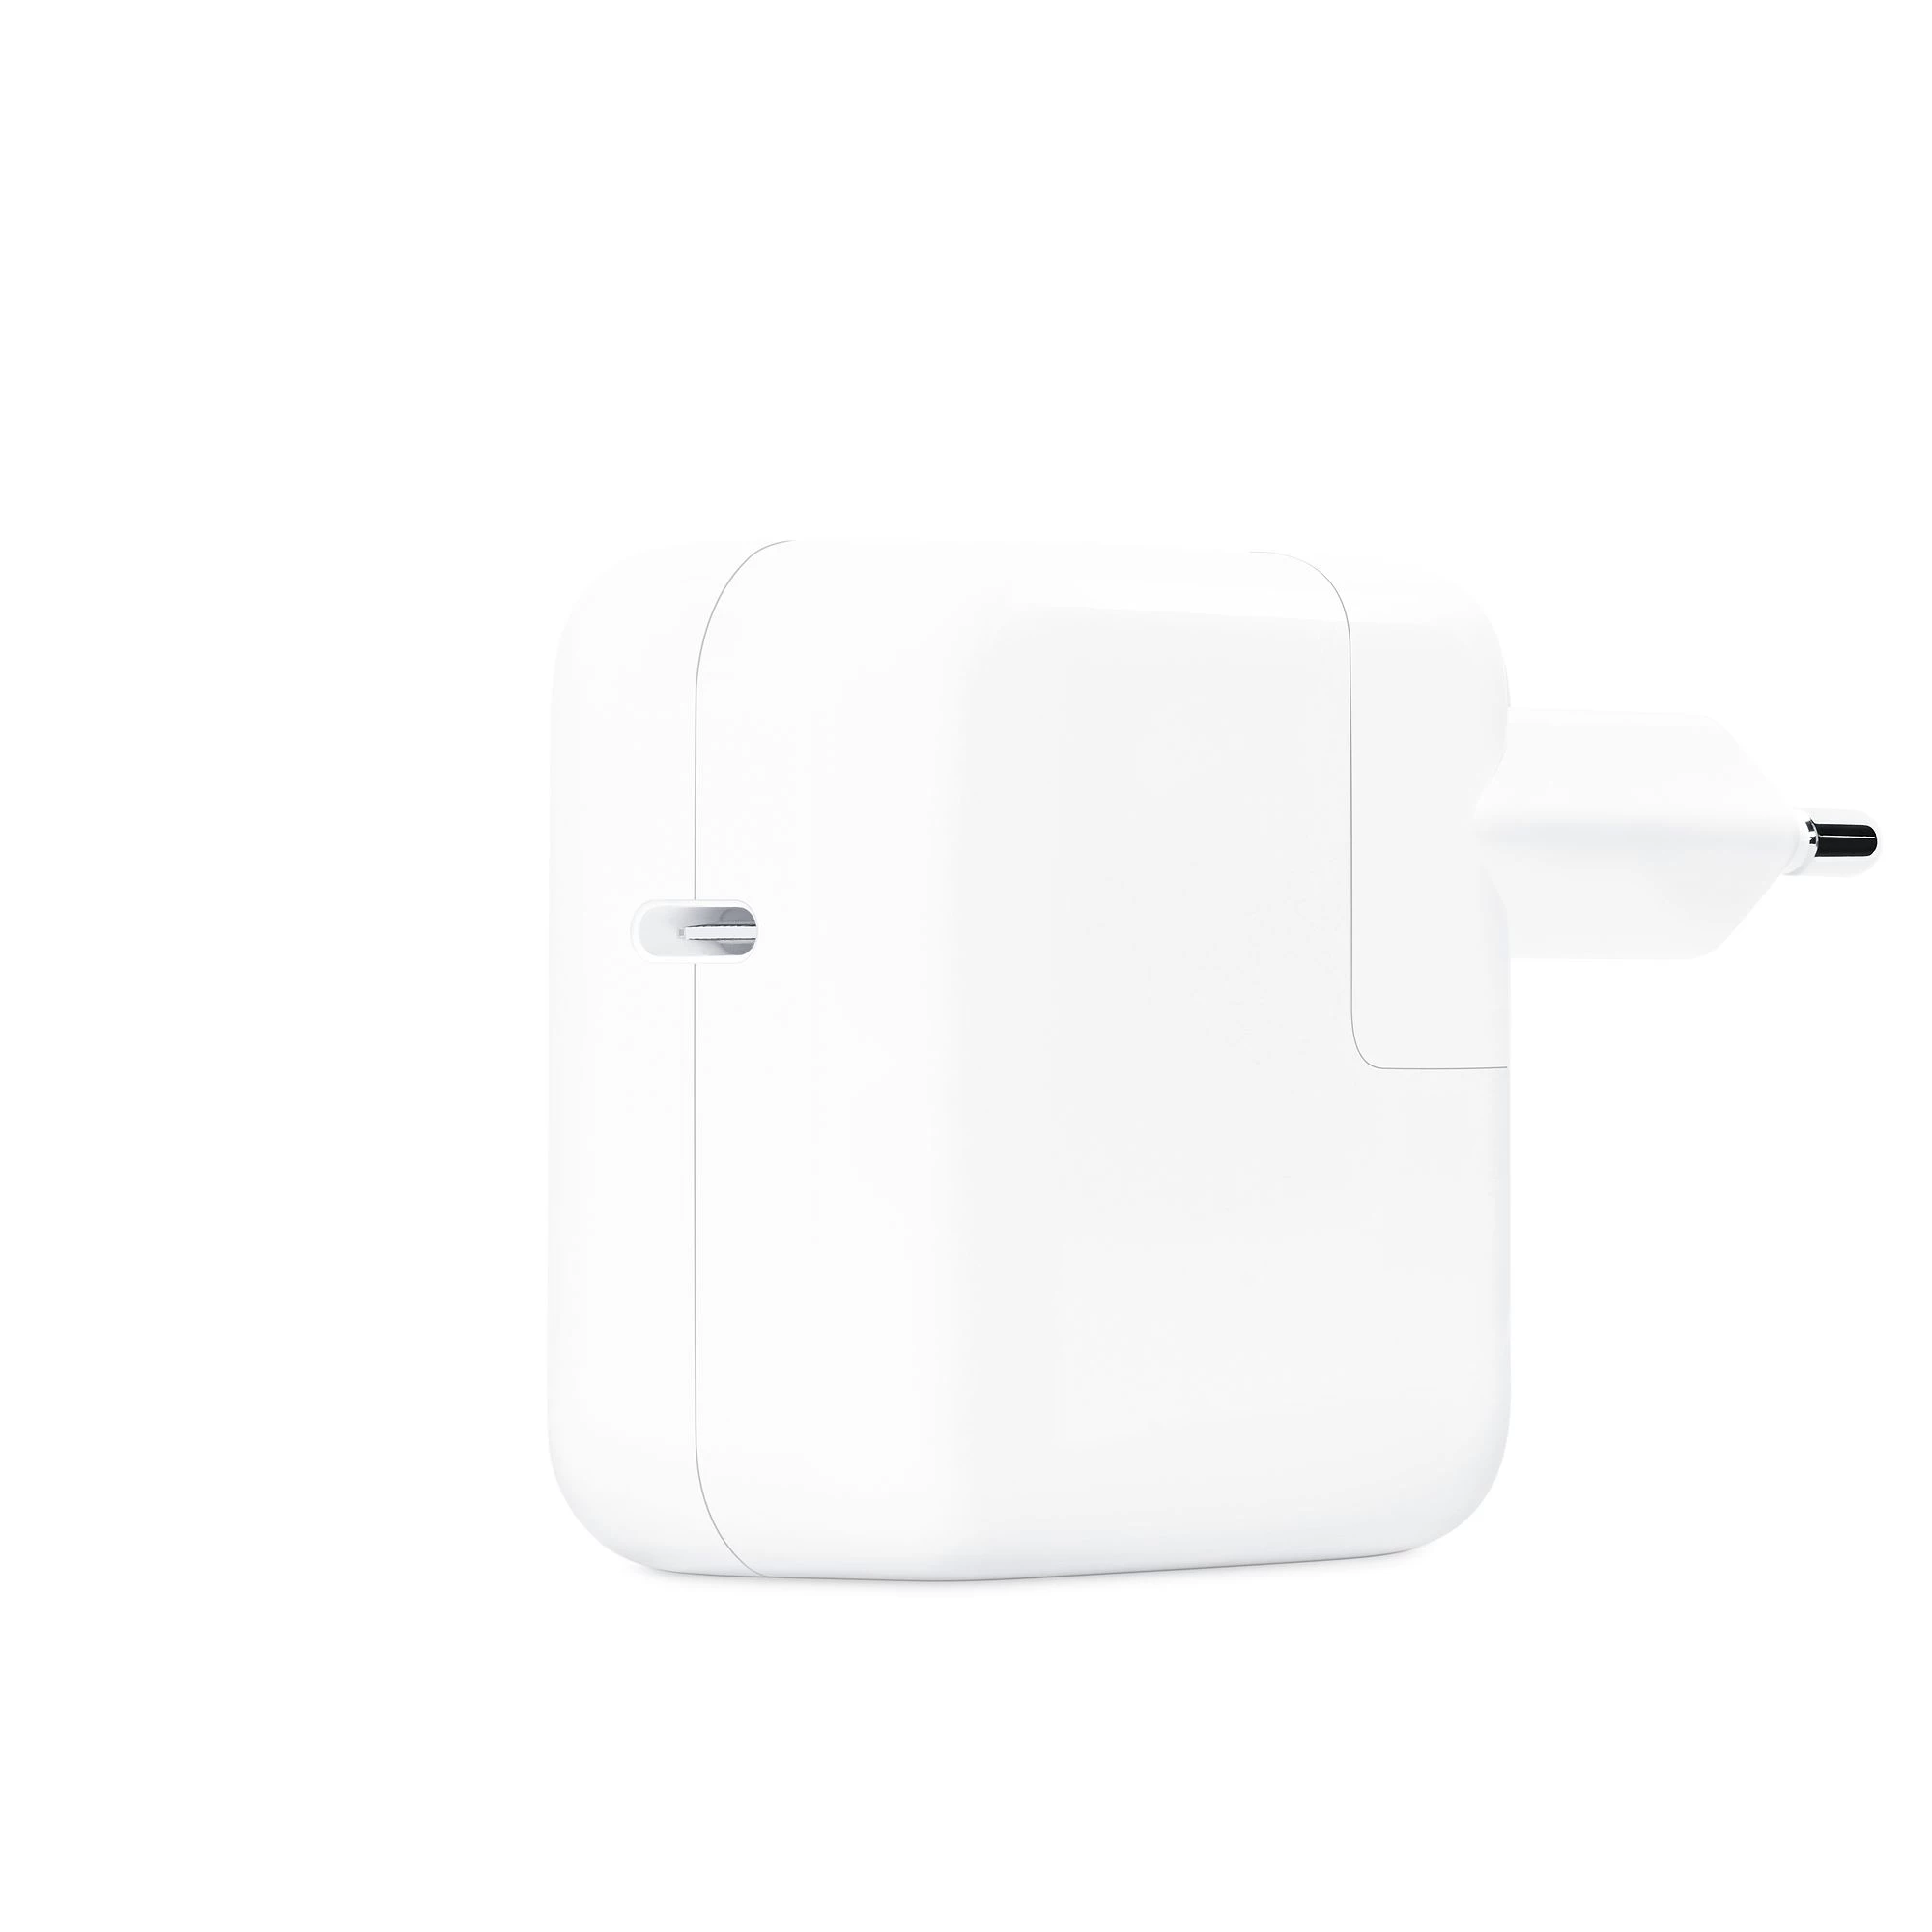 Apple 30W USB-C Power Adapter (MR2A2)